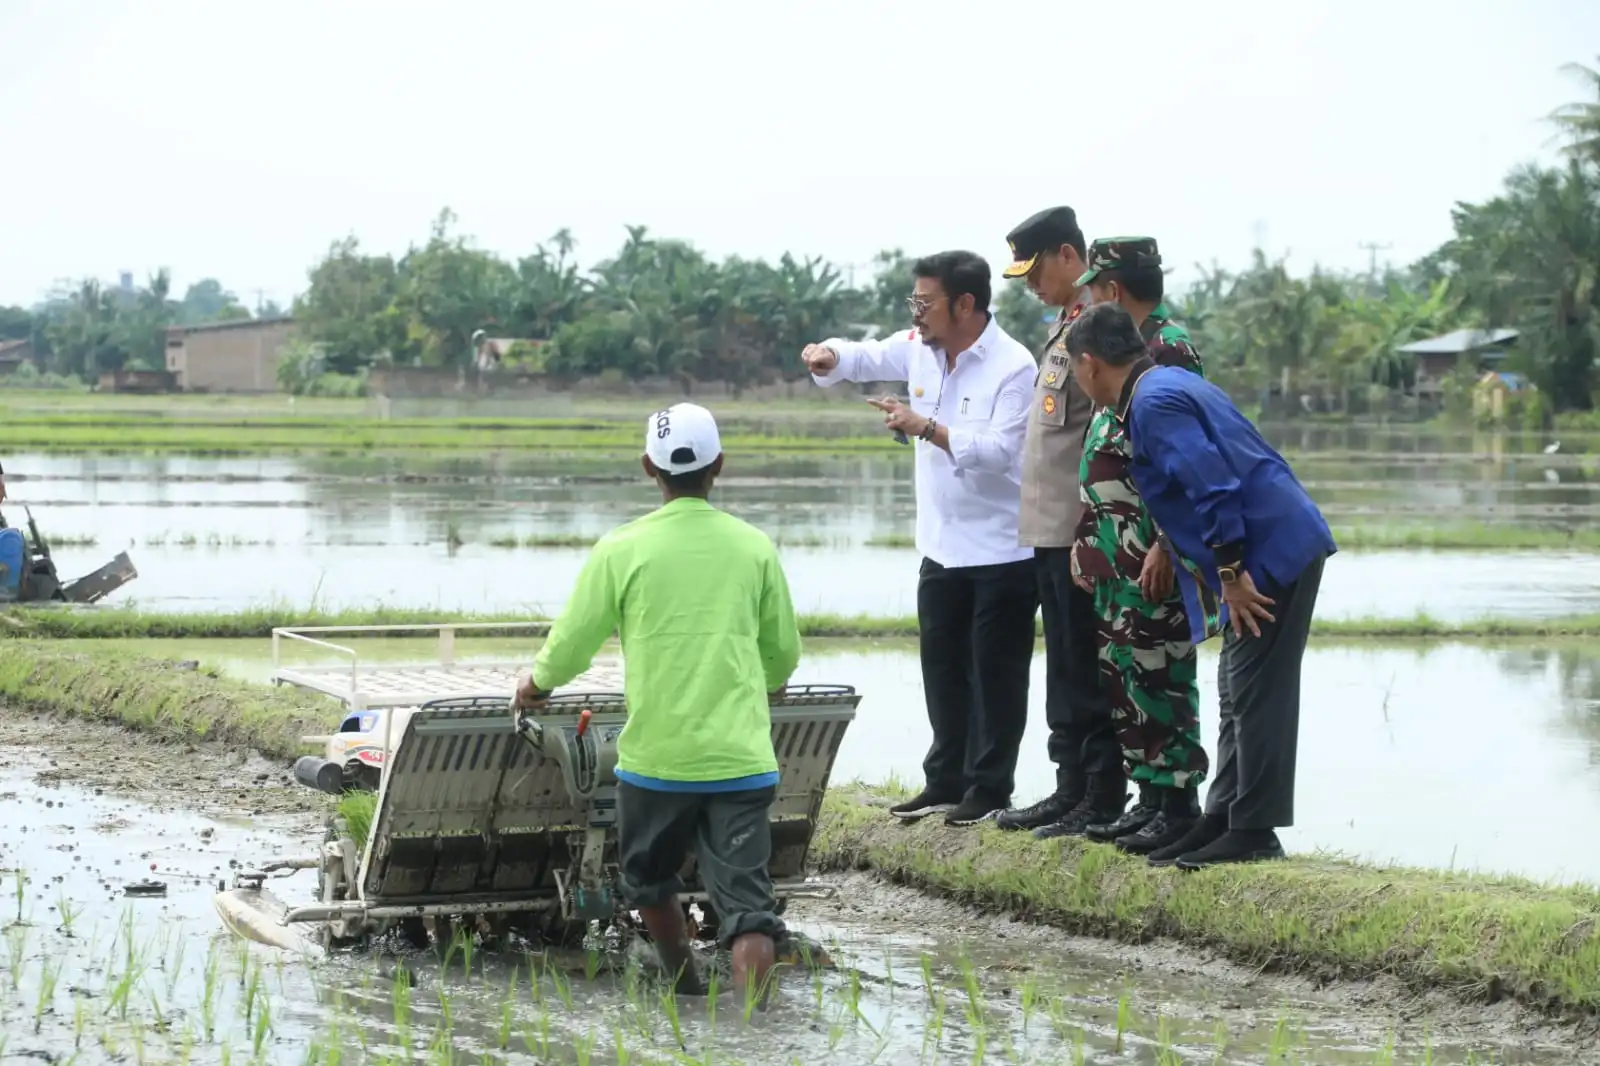 Mentan SYL Dorong Provinsi Sumut Jadi Lumbung Pangan Nasional